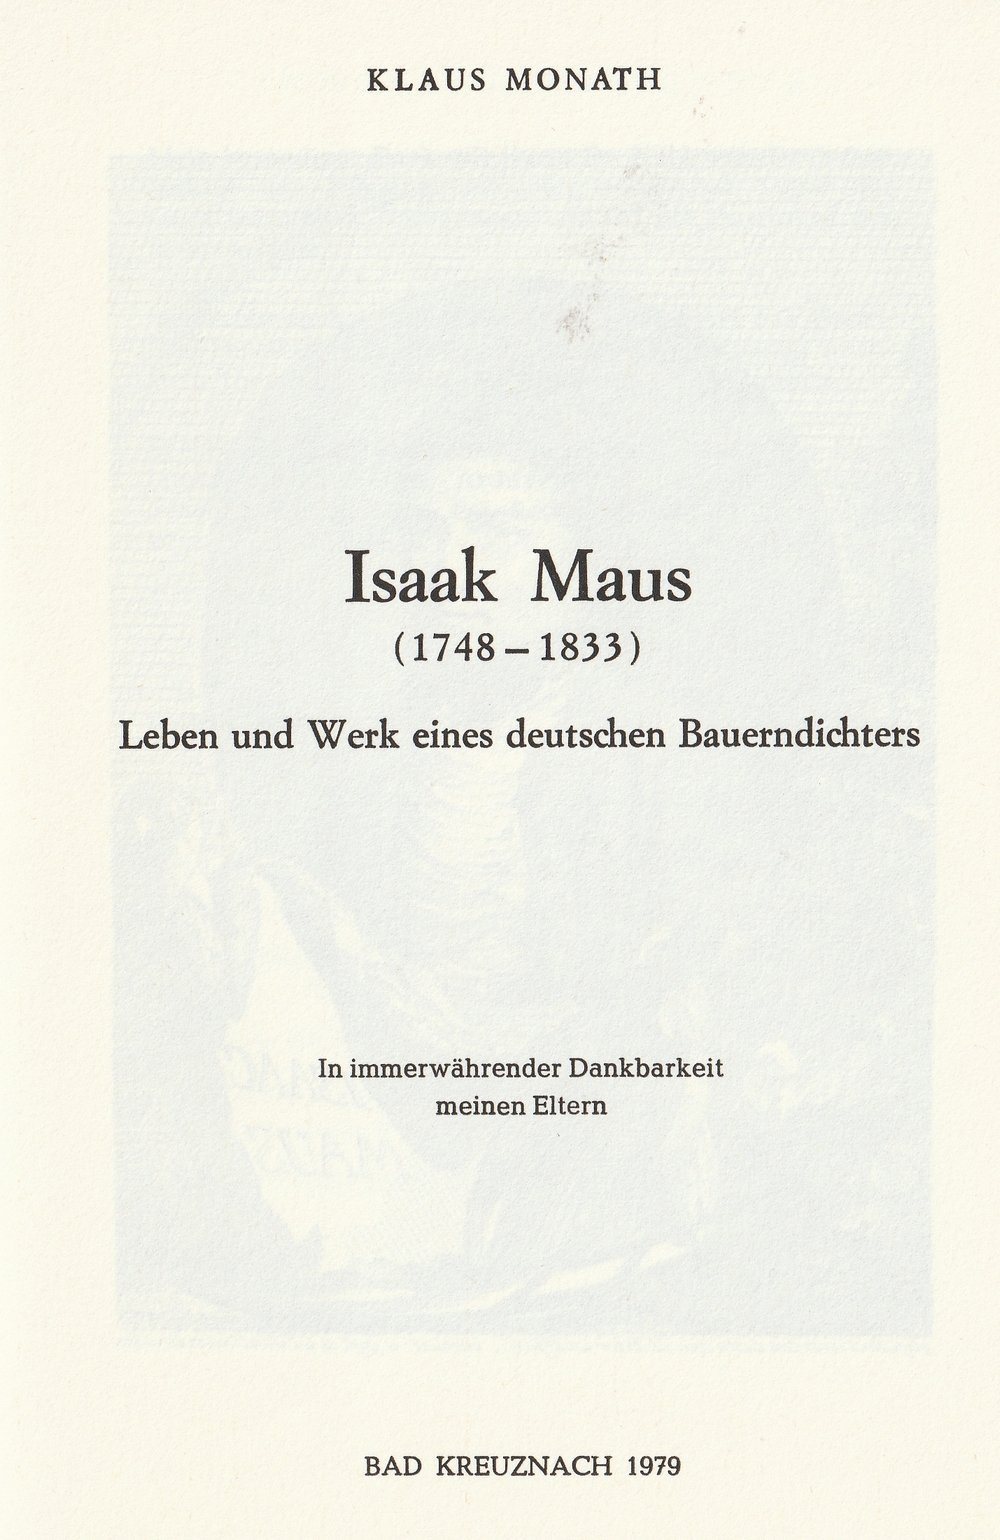 Isaak Maus (1748-1833) (Kulturverein Guntersblum CC BY-NC-SA)